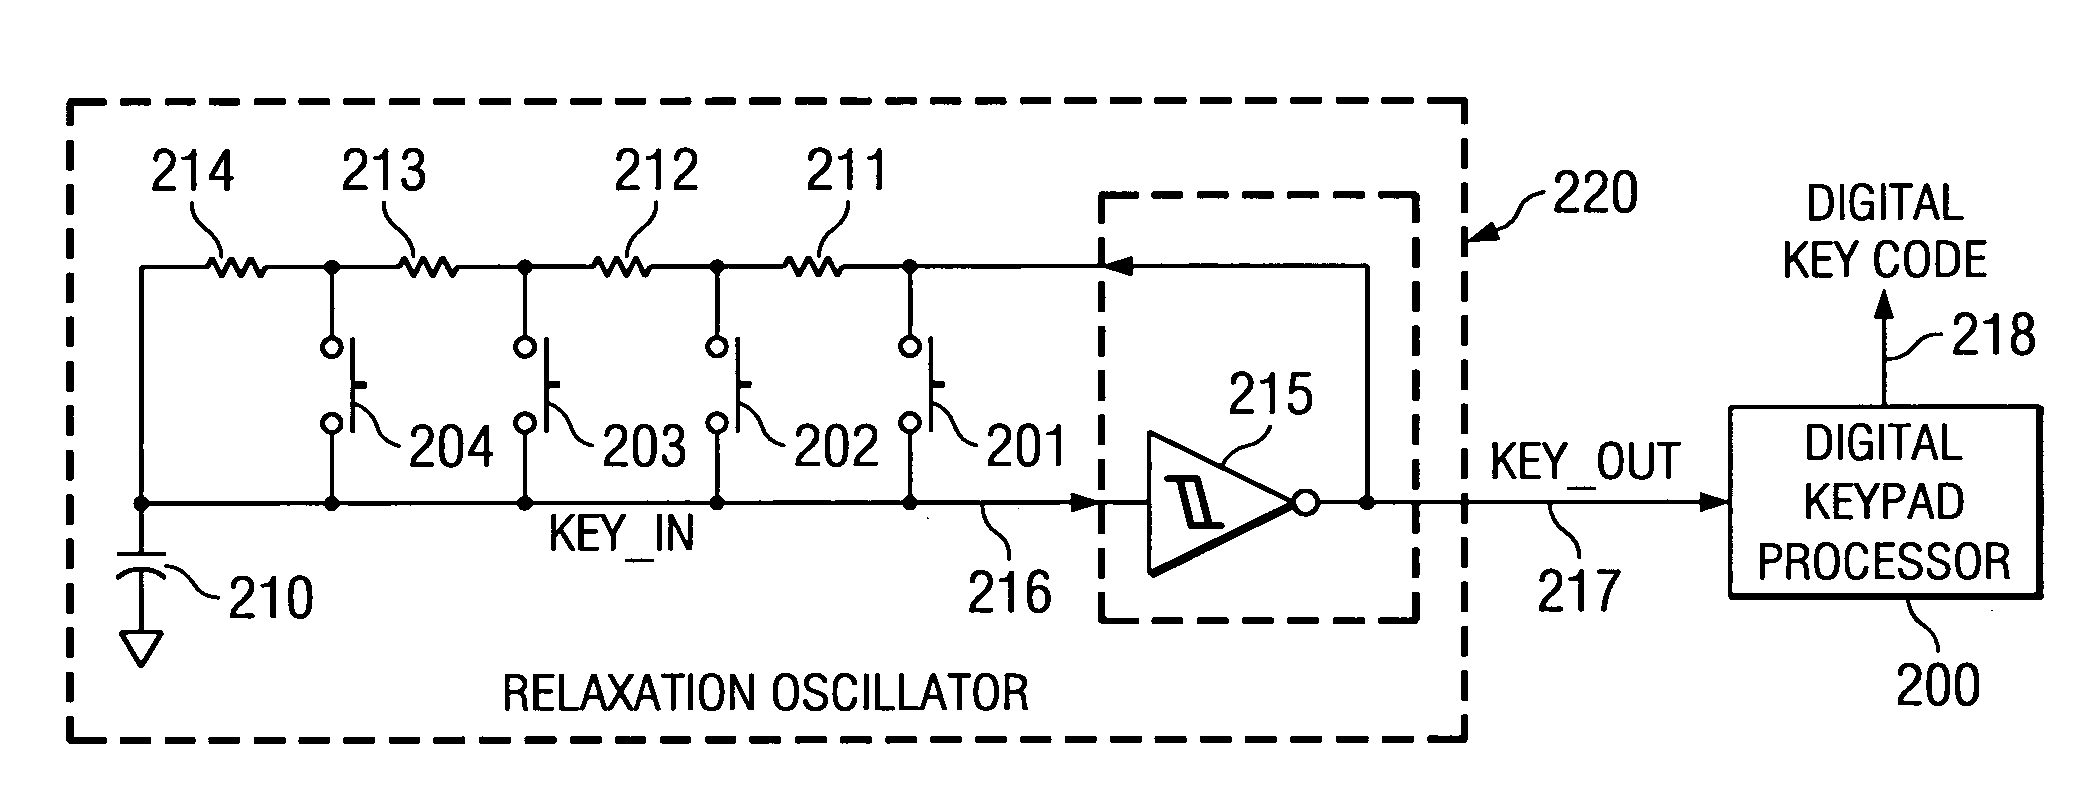 Relaxation oscillator based keypad decoder